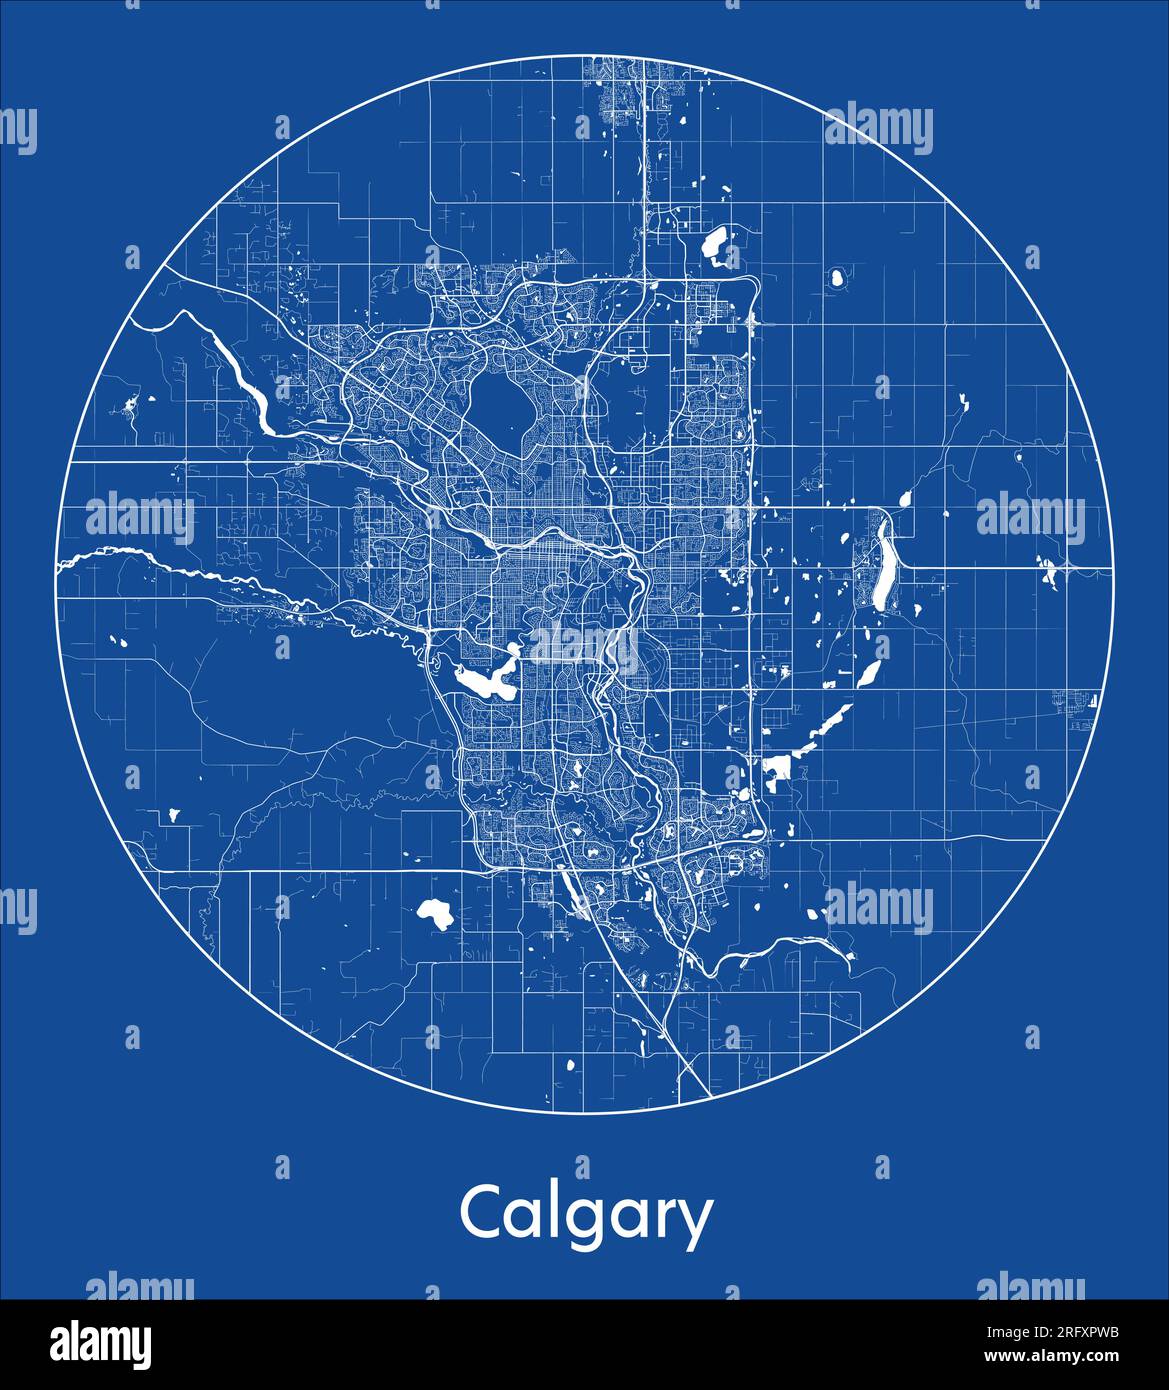 Stadtplan Calgary Kanada Nordamerika Blau aufgedruckt Kreisvektordarstellung Stock Vektor